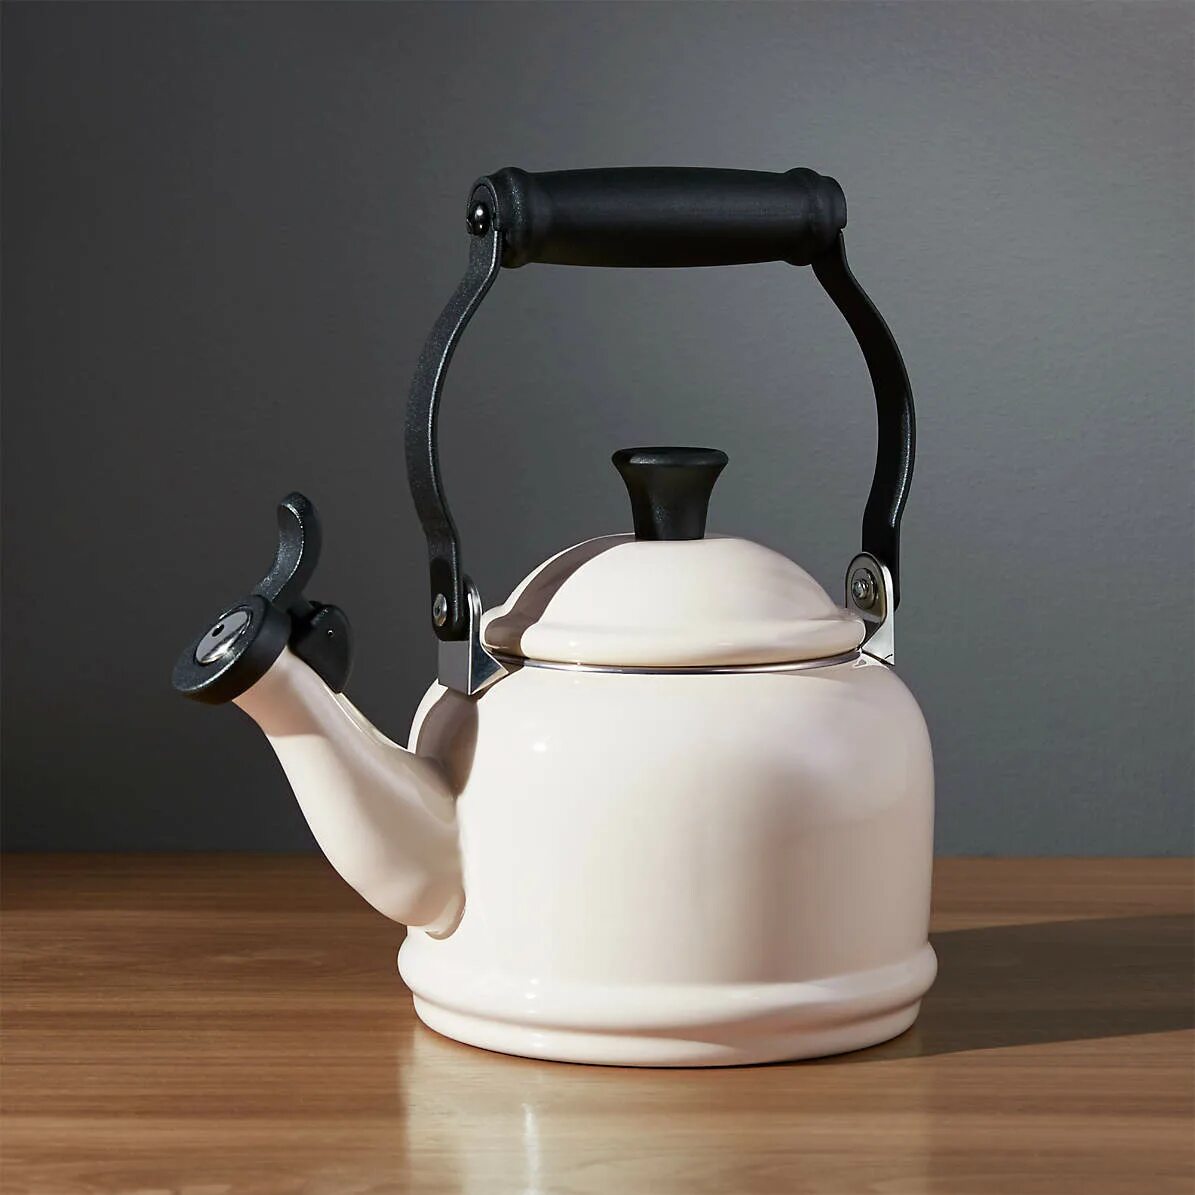 Чайник Solis Tea kettle Classic. Чайник kettle Classic Mr 1320. Чайник cozy Home. Creuset чайник со свистком Traditional kettle. Kettle 1a